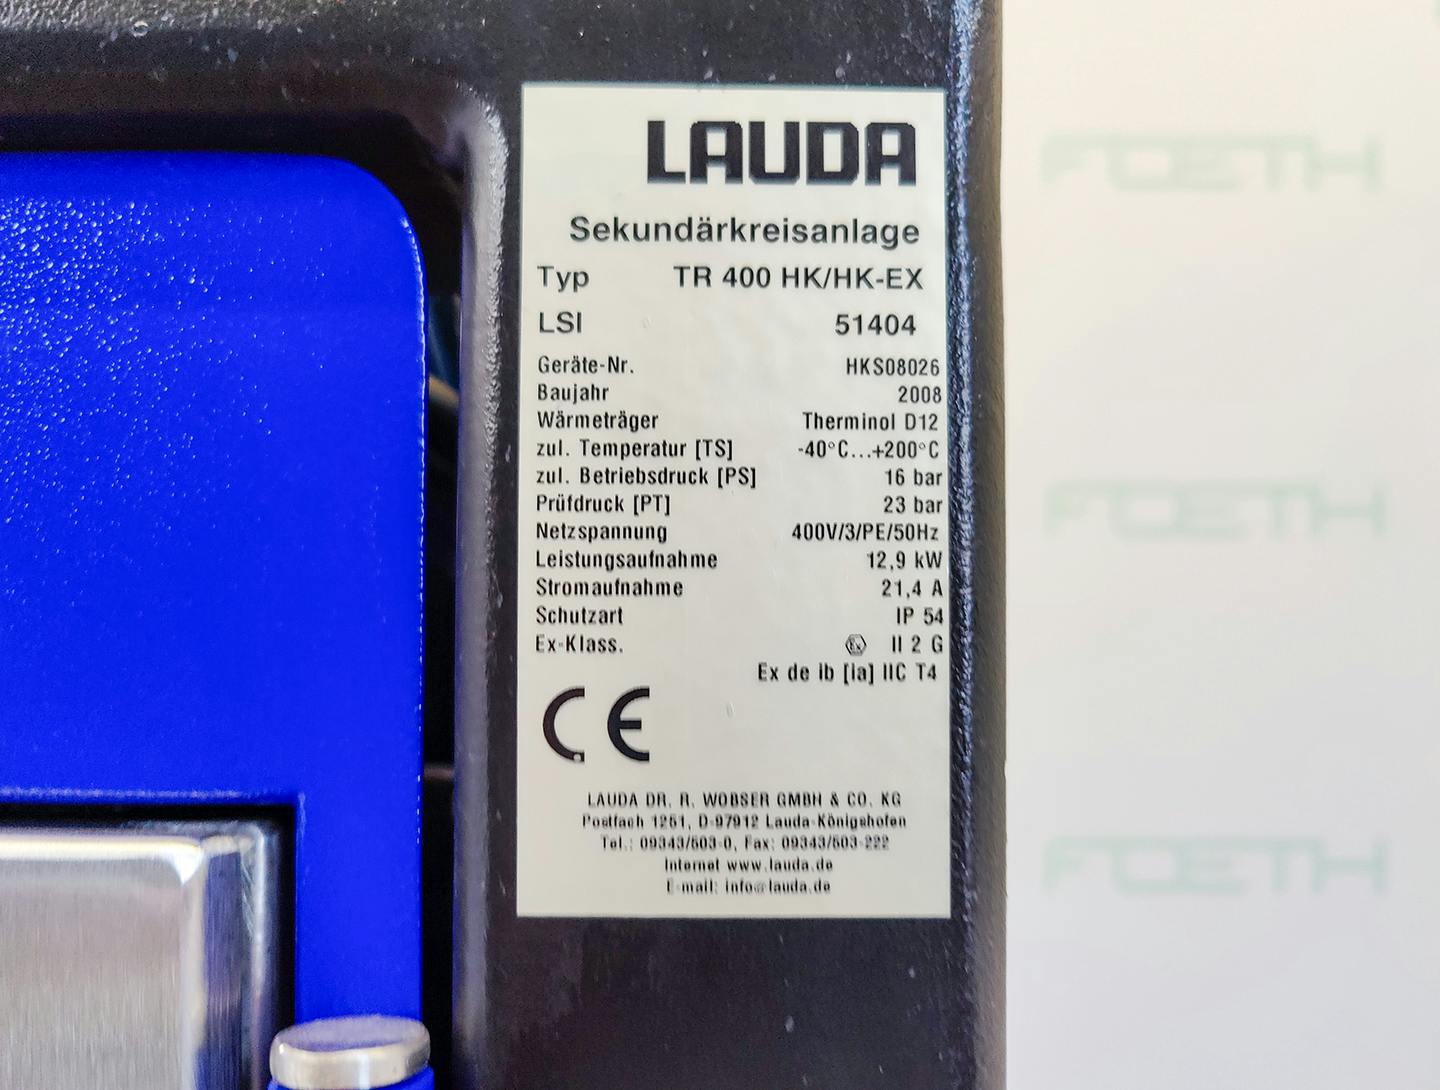 Lauda TR400 HK/HK-EX "secondary circuit system" - Chladic recirkulacní - image 14